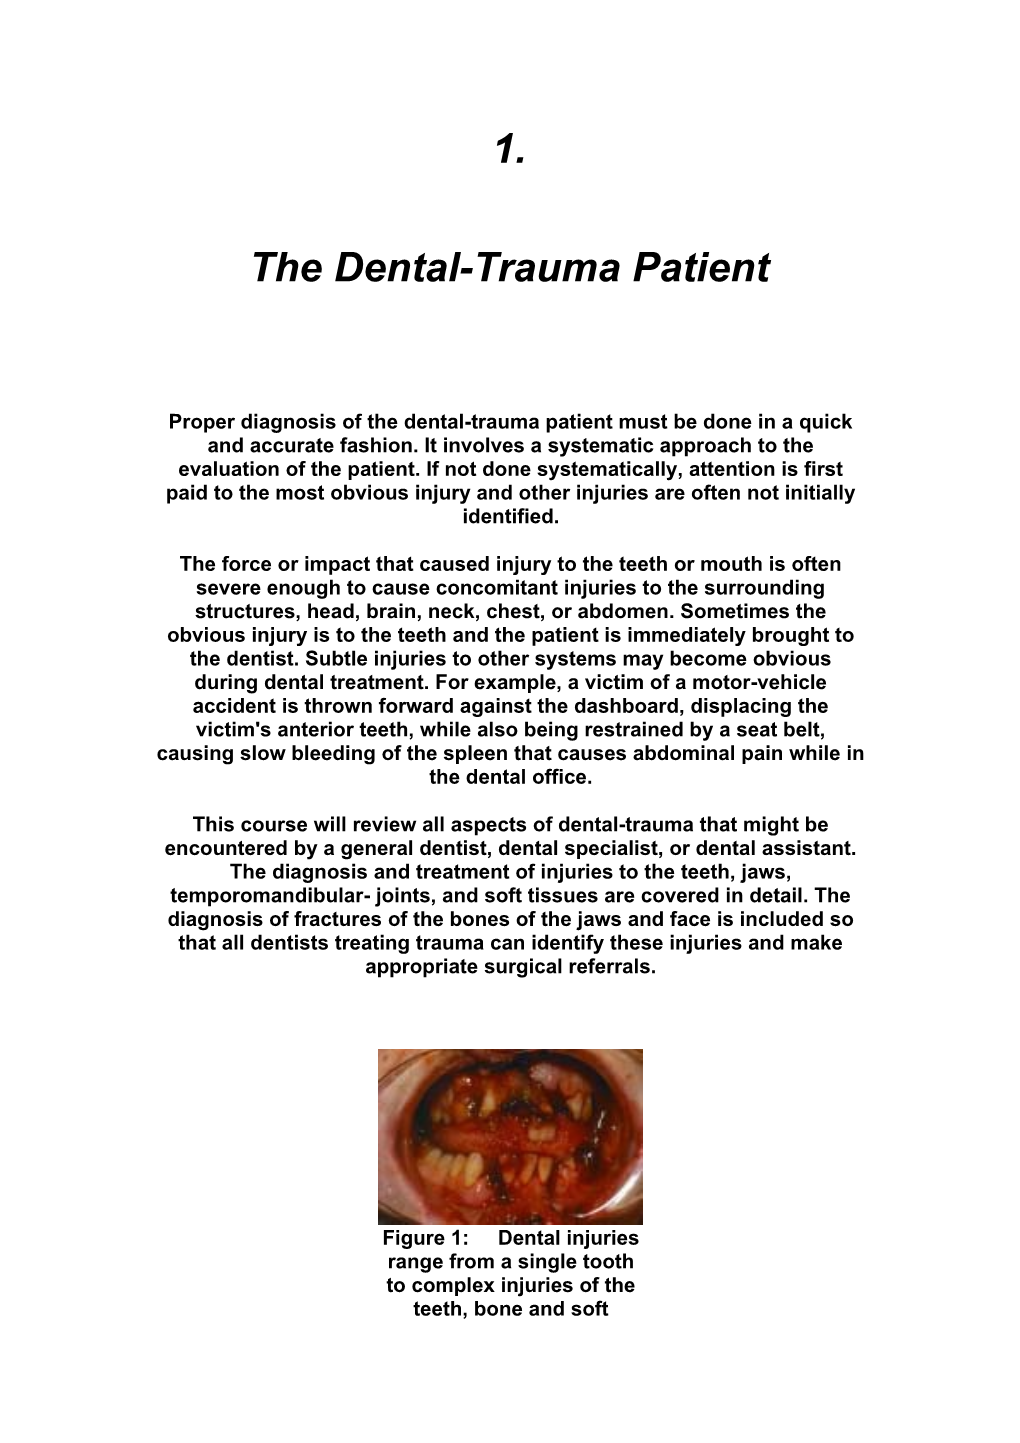 The Dental-Trauma Patient